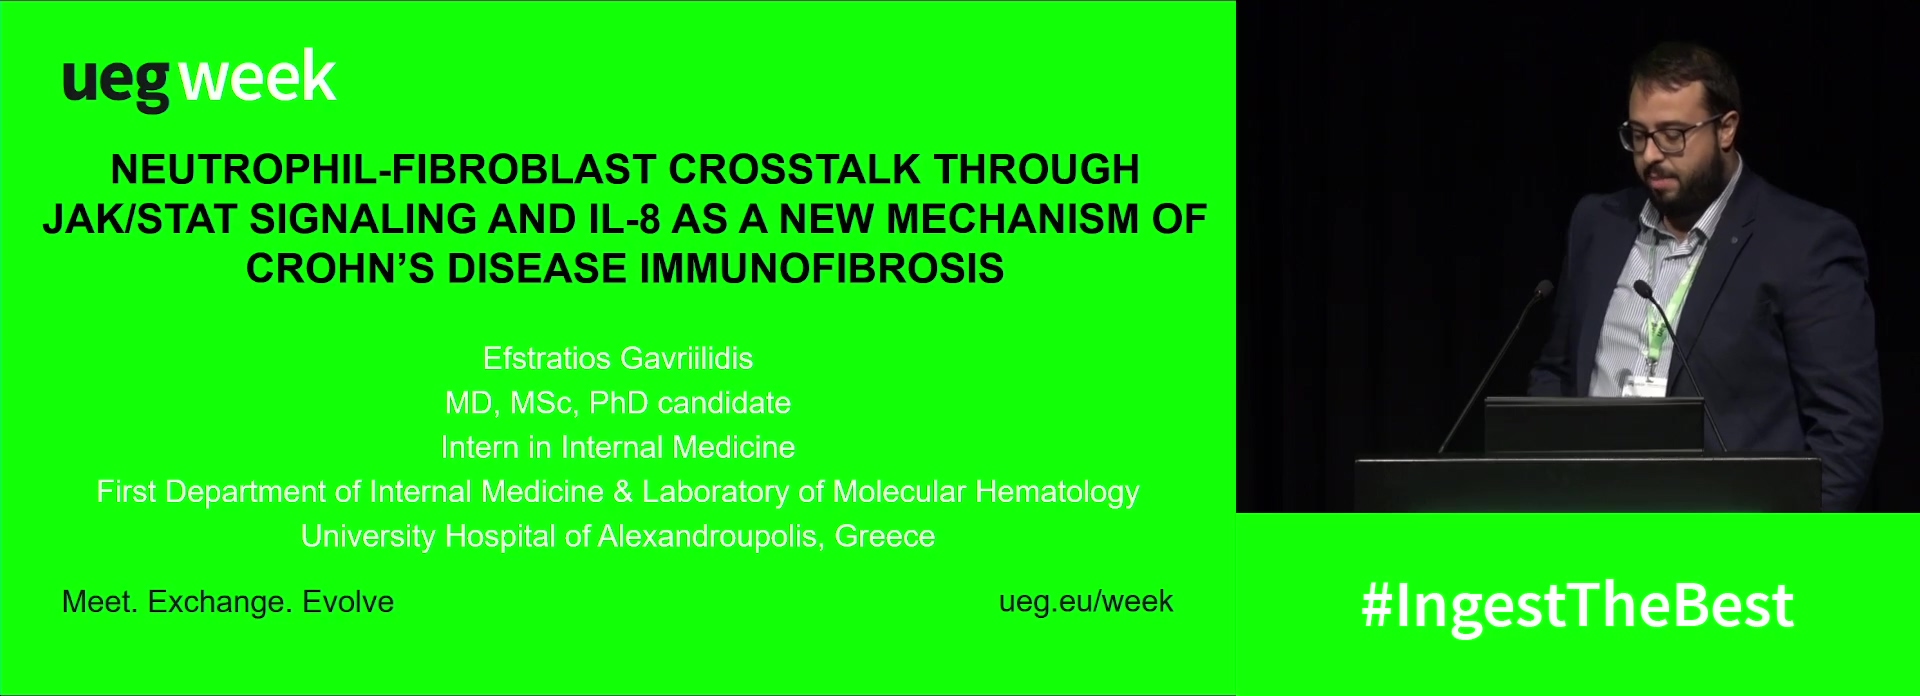 NEUTROPHIL-FIBROBLAST CROSSTALK THROUGH JAK/STAT SIGNALING AND IL-8 AS A NEW MECHANISM OF CROHN’S DISEASE IMMUNOFIBROSIS